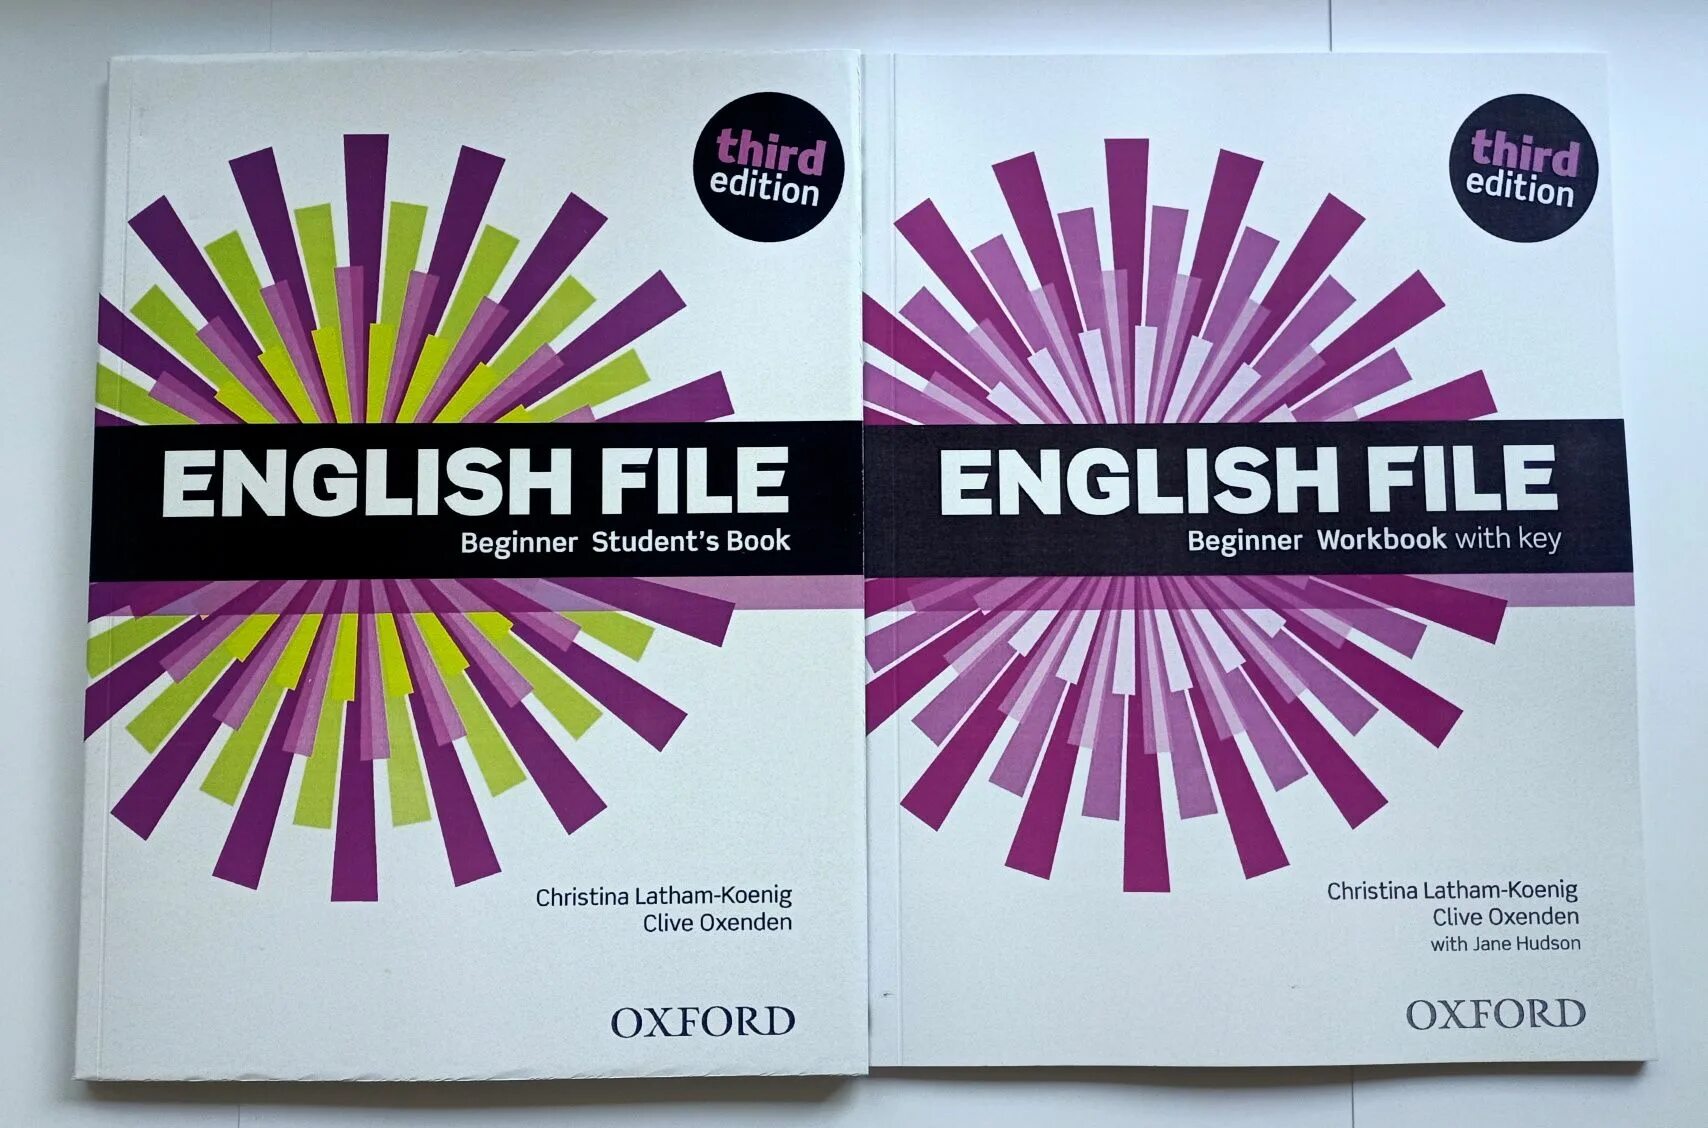 Учебник English file. English file уровни. English file third Edition. Учебники English file уровни. English file wb